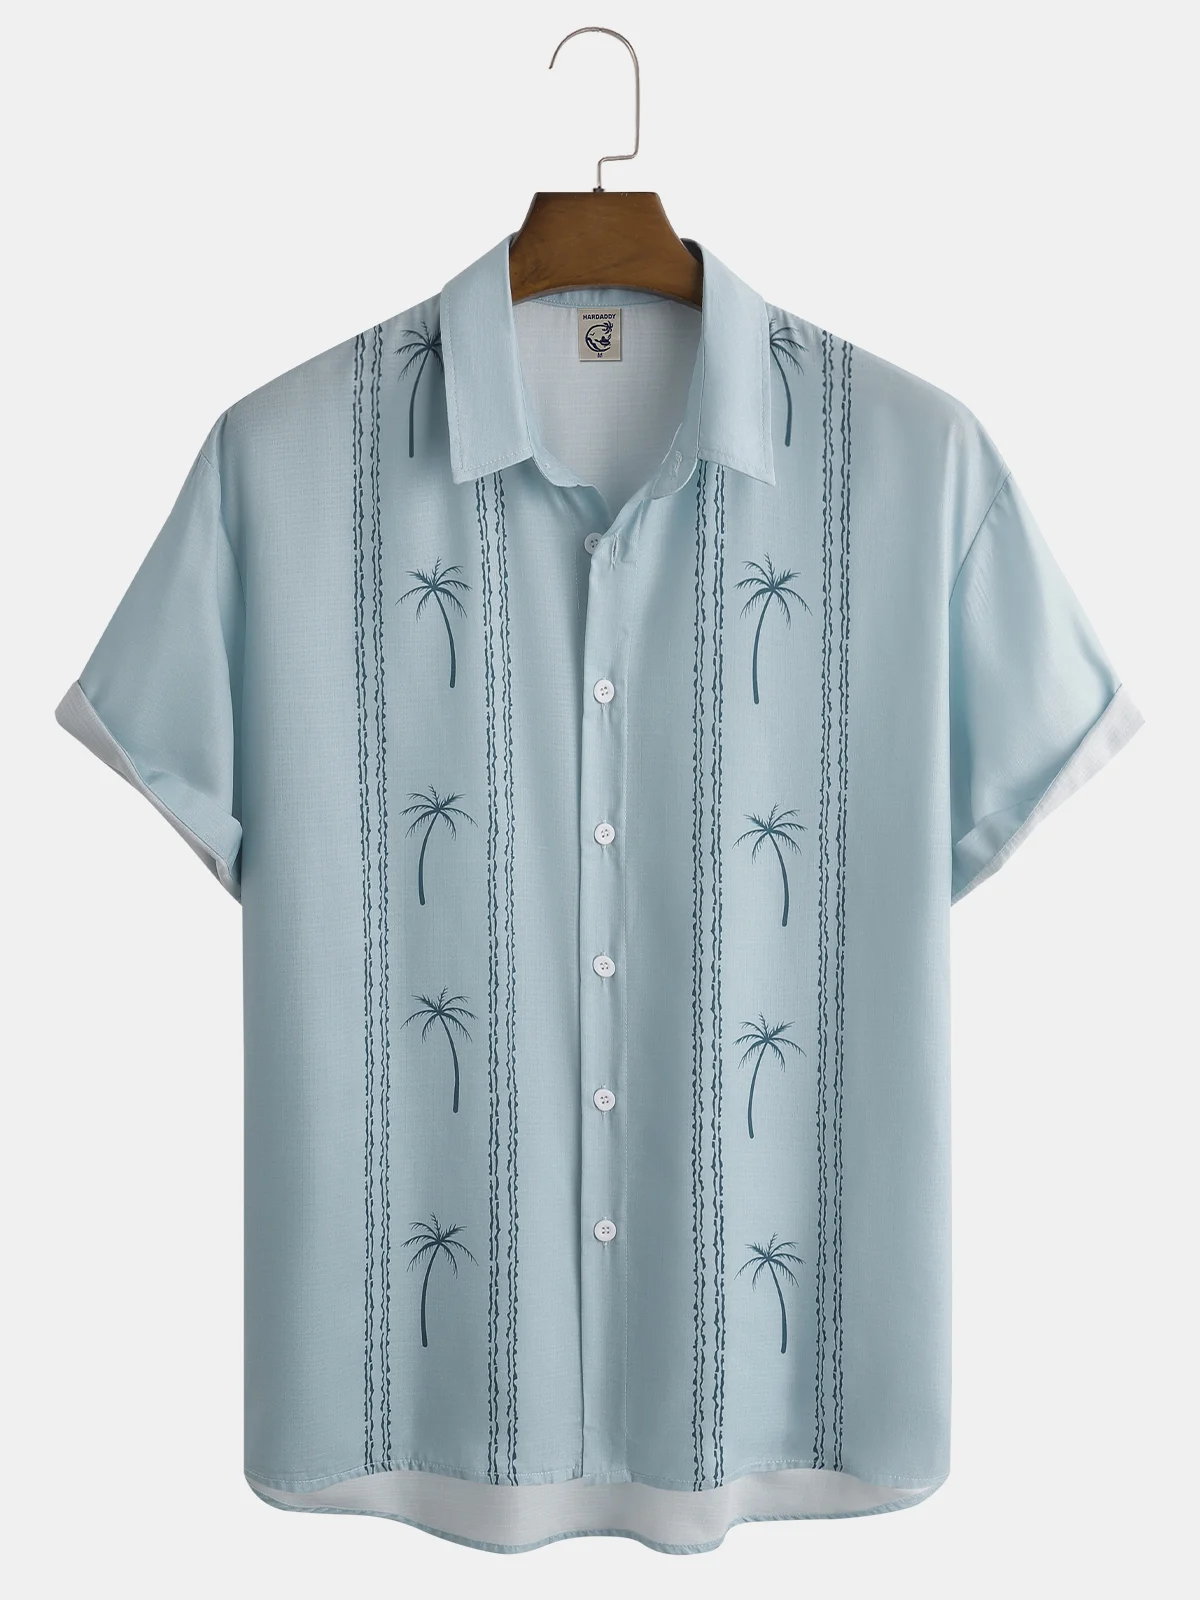 Hardaddy Coconut Tree Print Short Sleeve Bowling Shirt